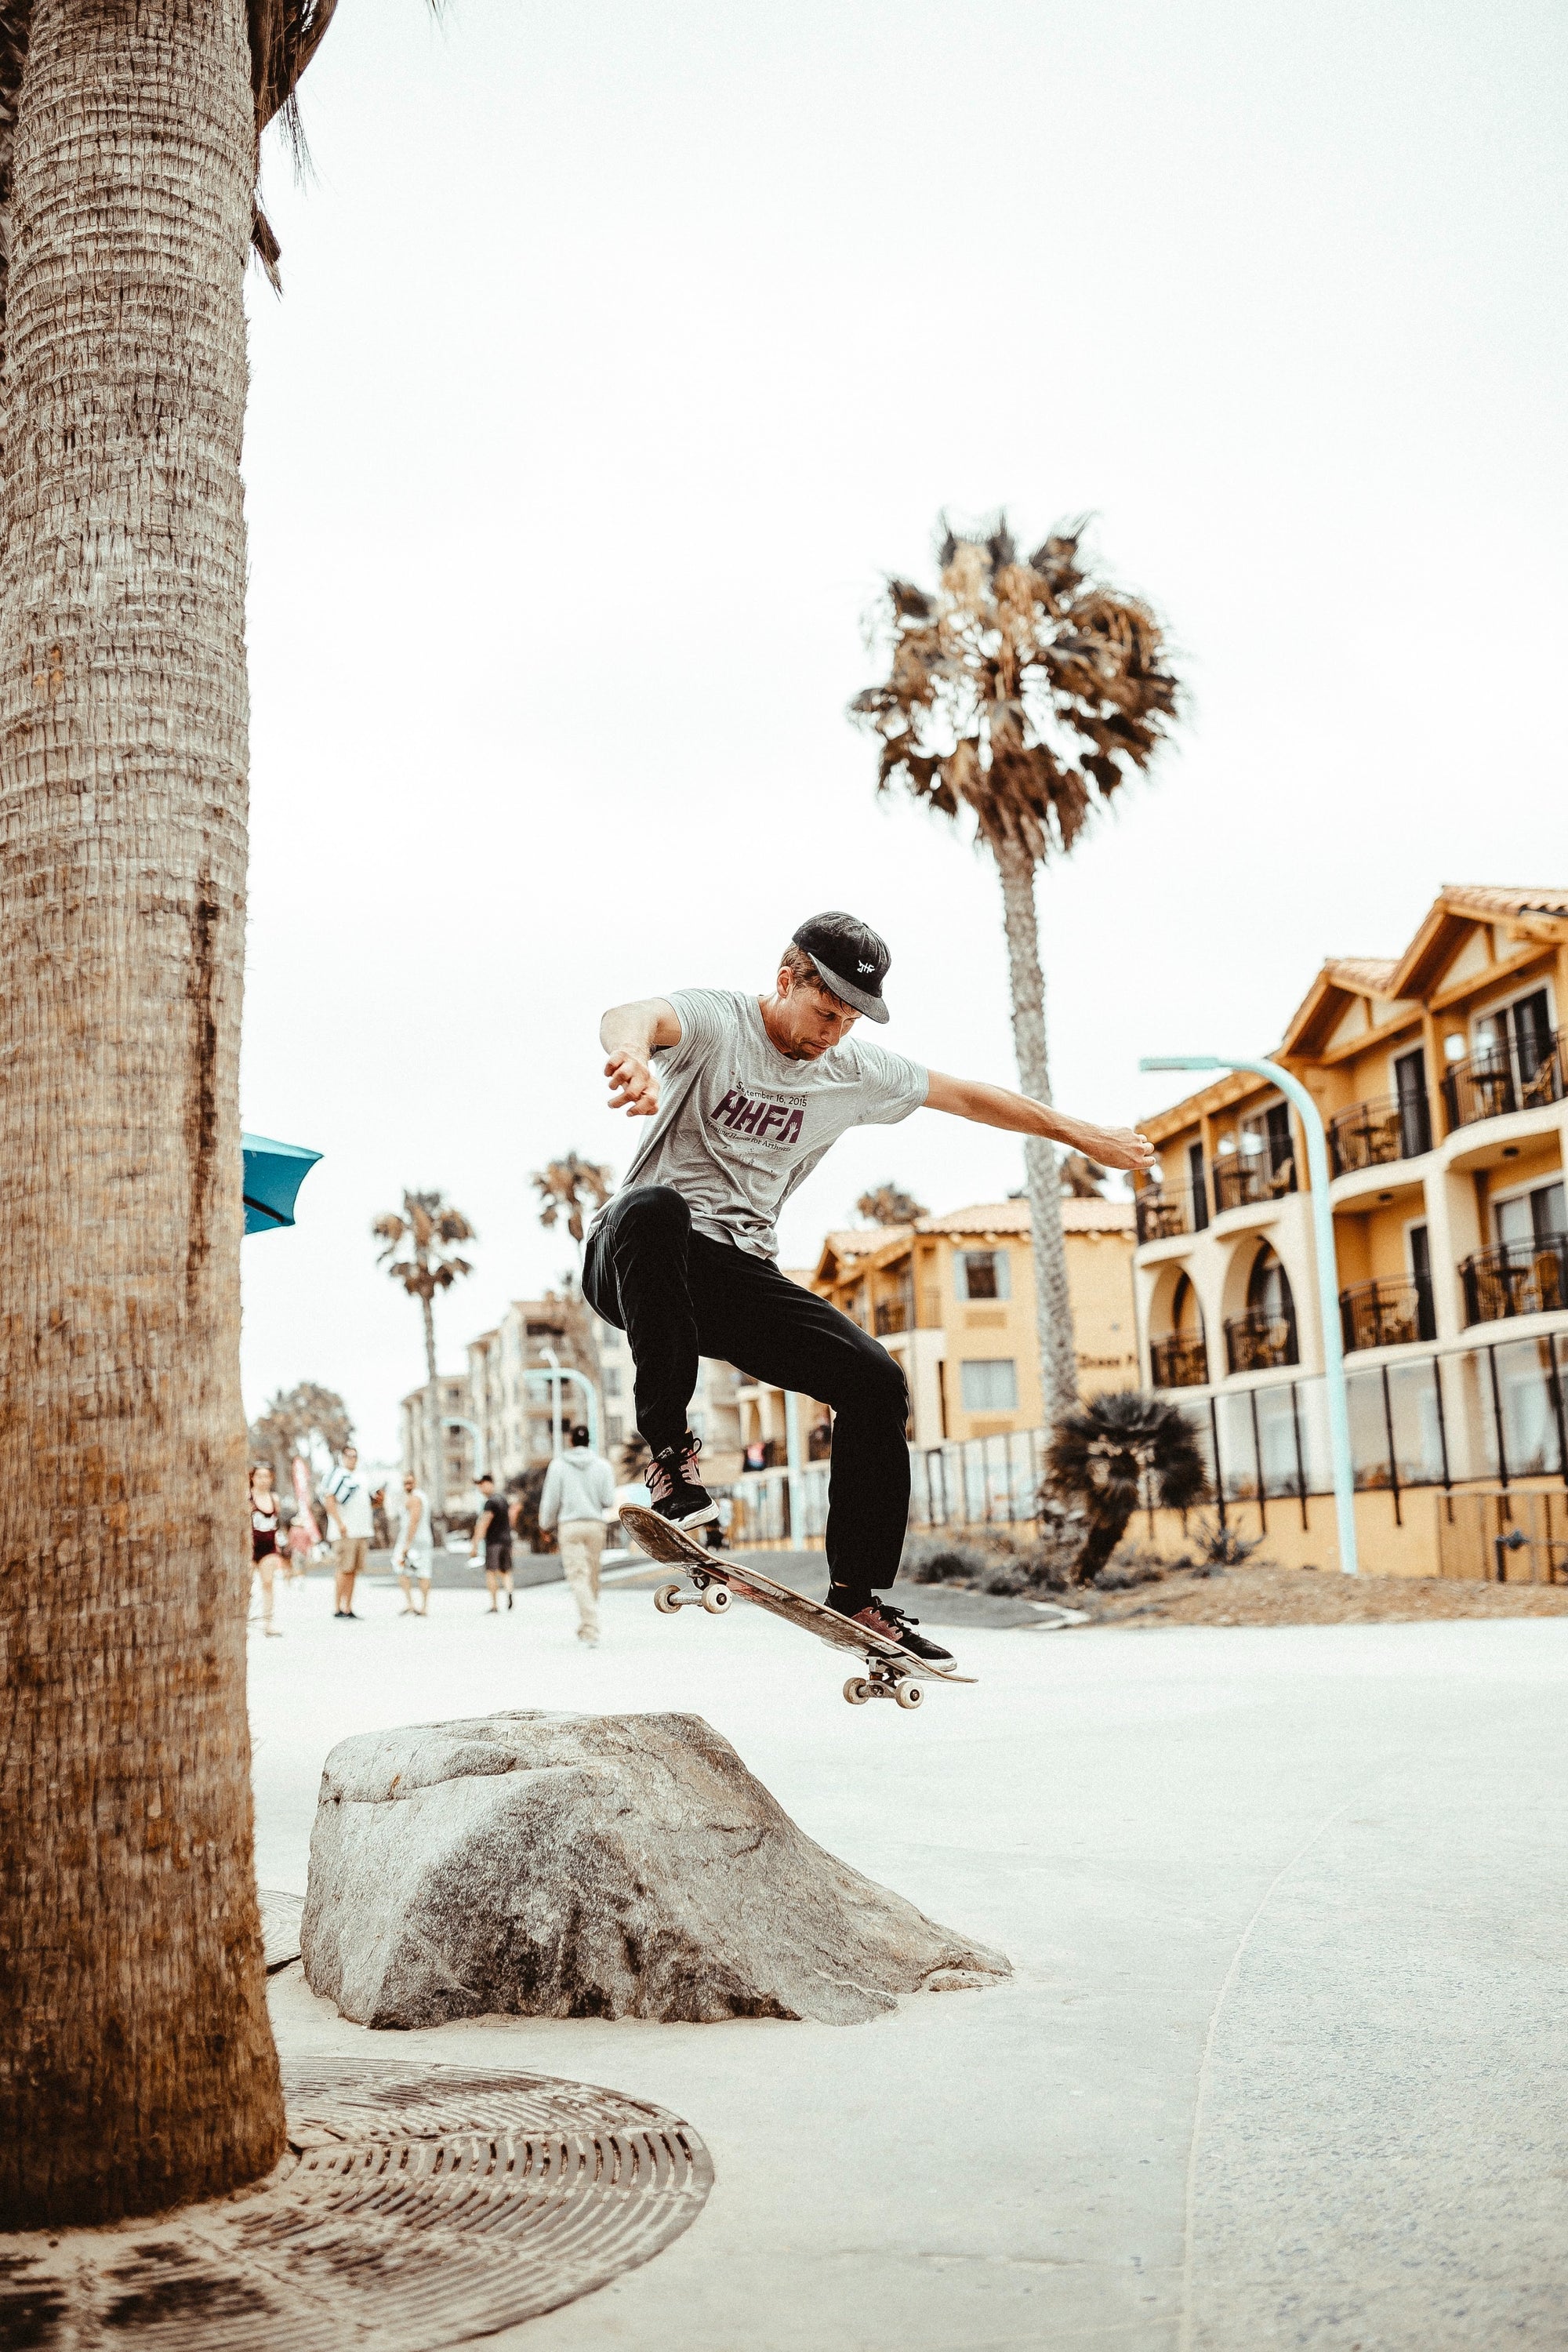 Street Skateboarding [A Complete Guide]